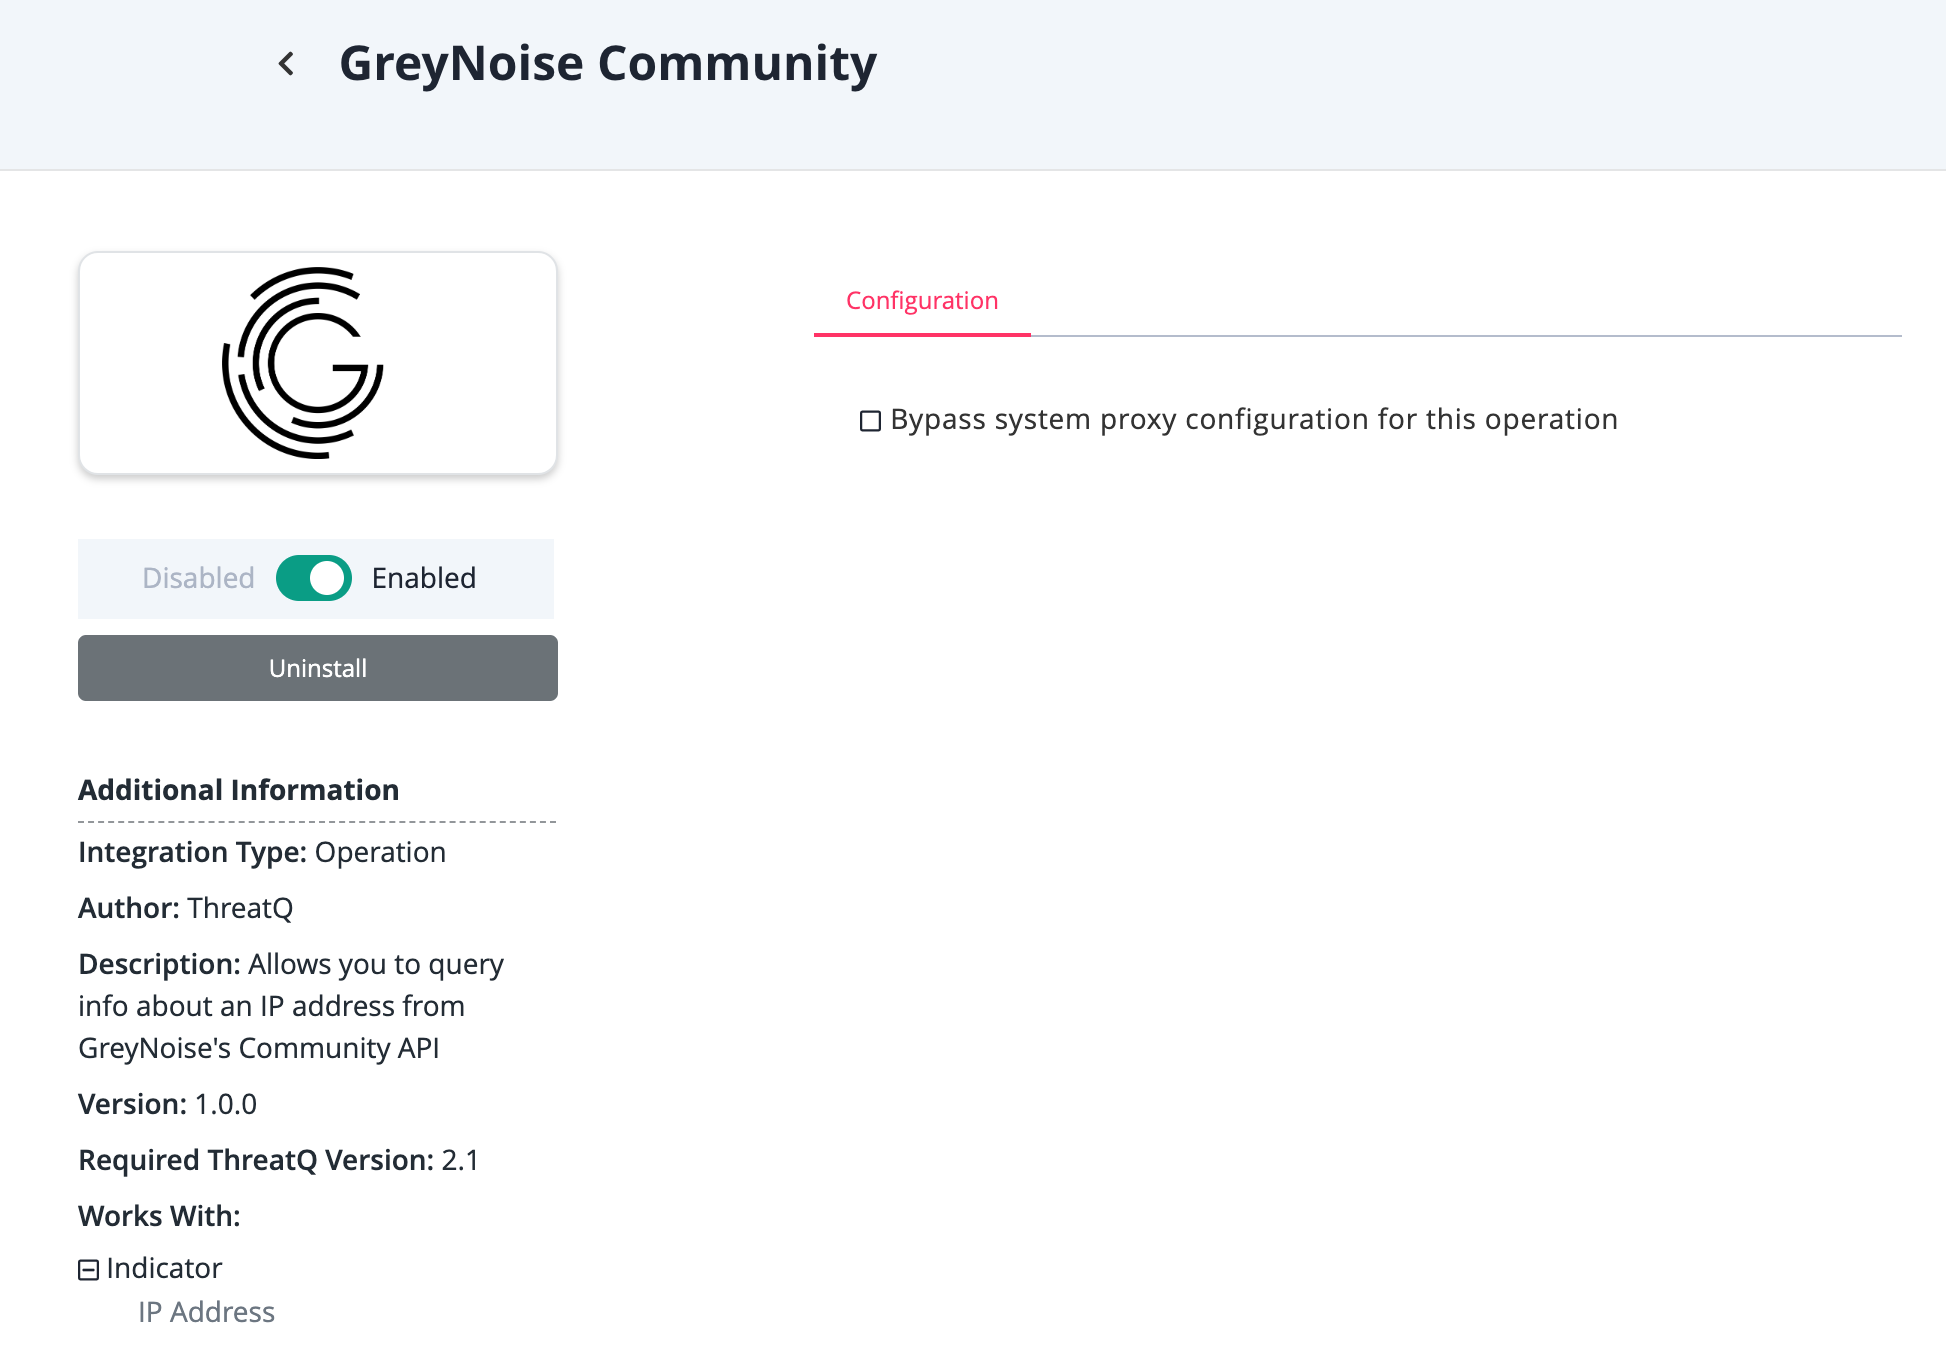 GreyNoise Community Operation configuration options